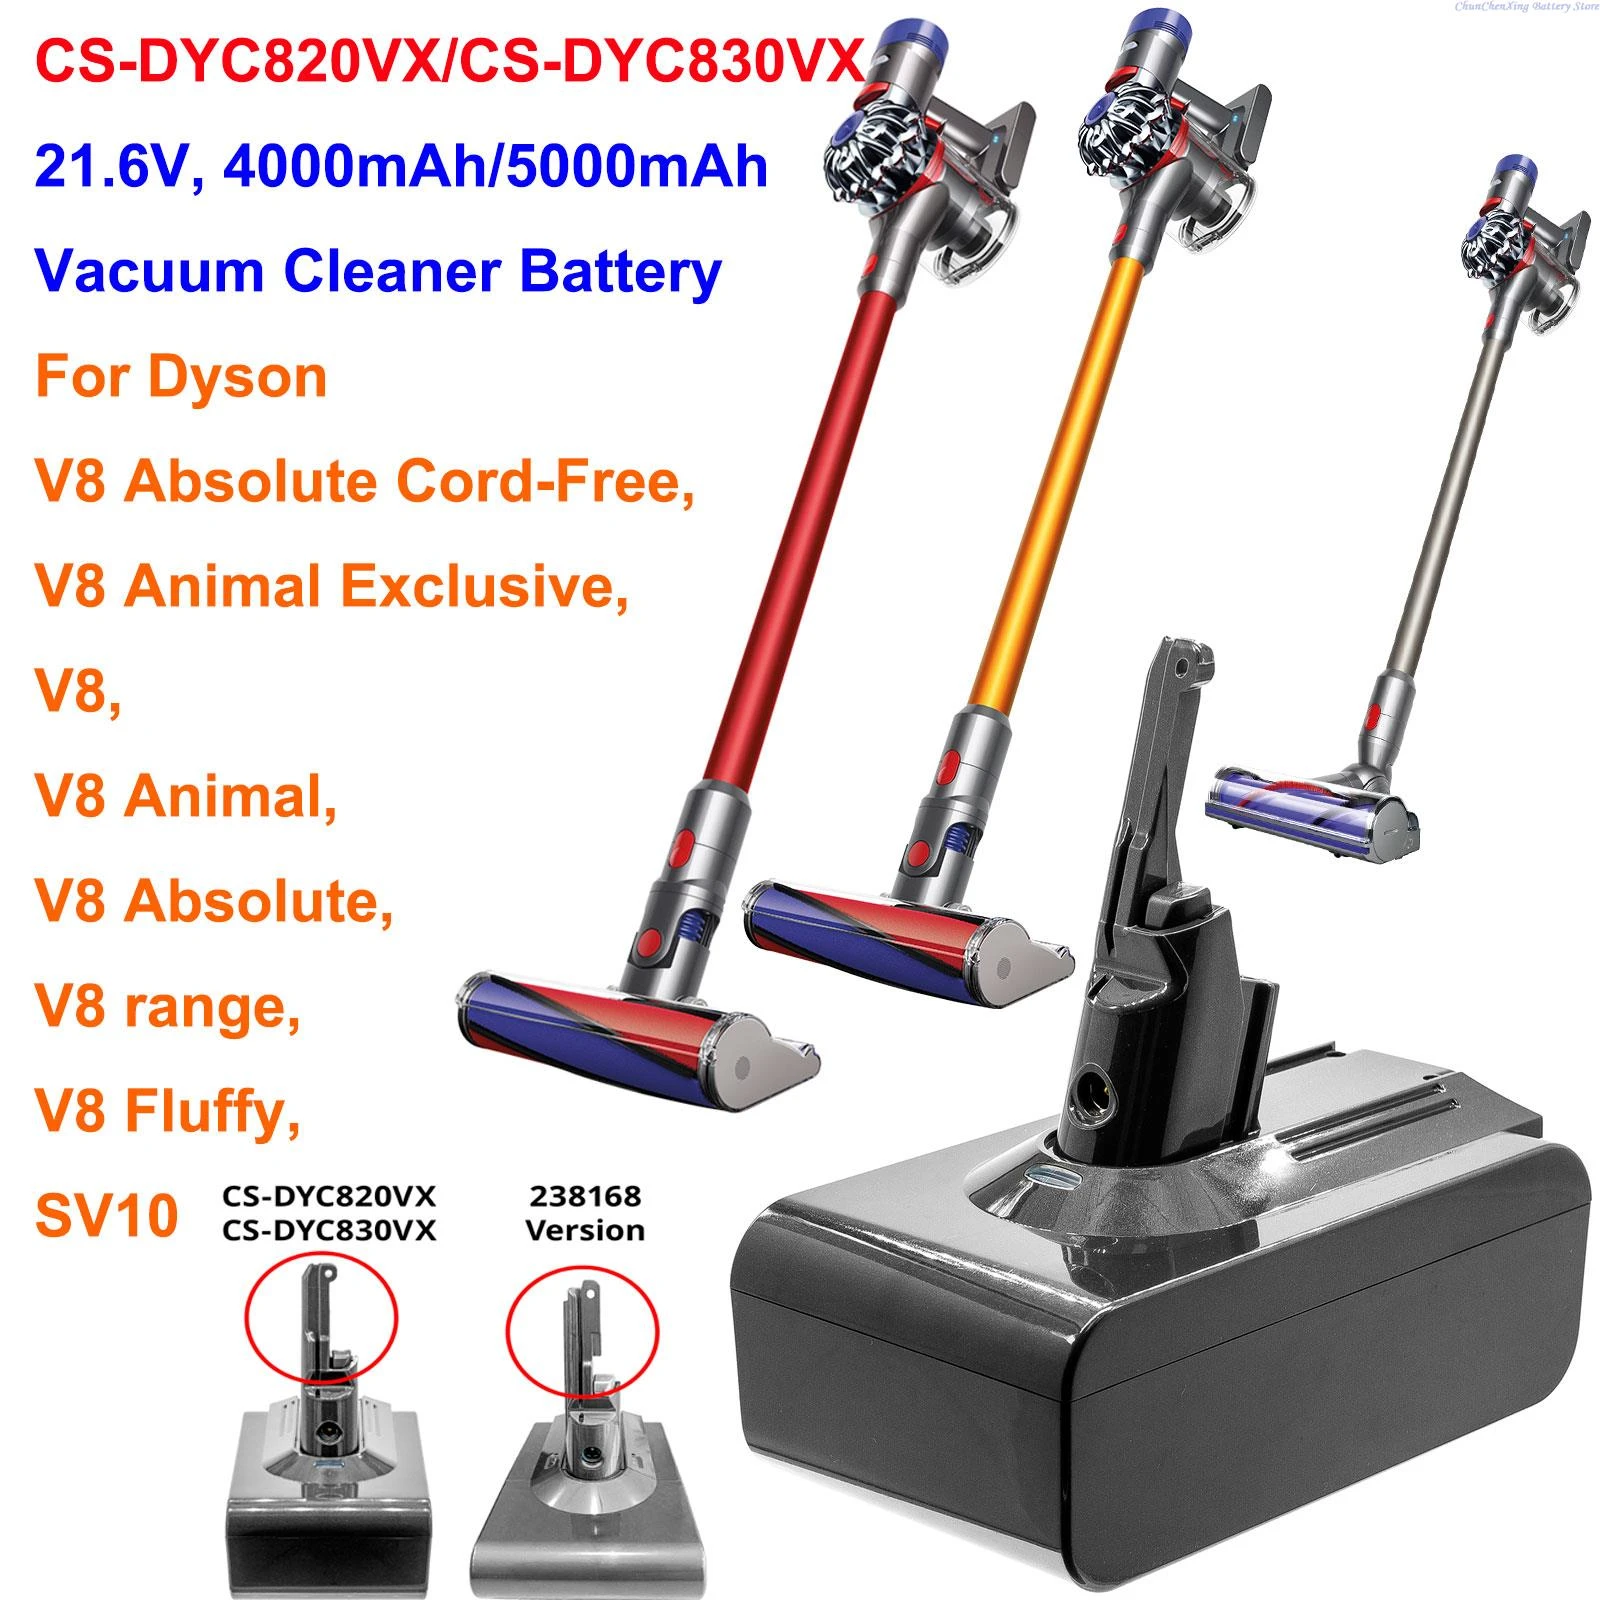 Cameron Sino 4000mah/5000mah Battery For Dyson Sv10, V8, V8 Absolute, V8  Animal, V8 Animal Exclusive, V8 Fluffy, V8 Range - Digital Batteries -  AliExpress